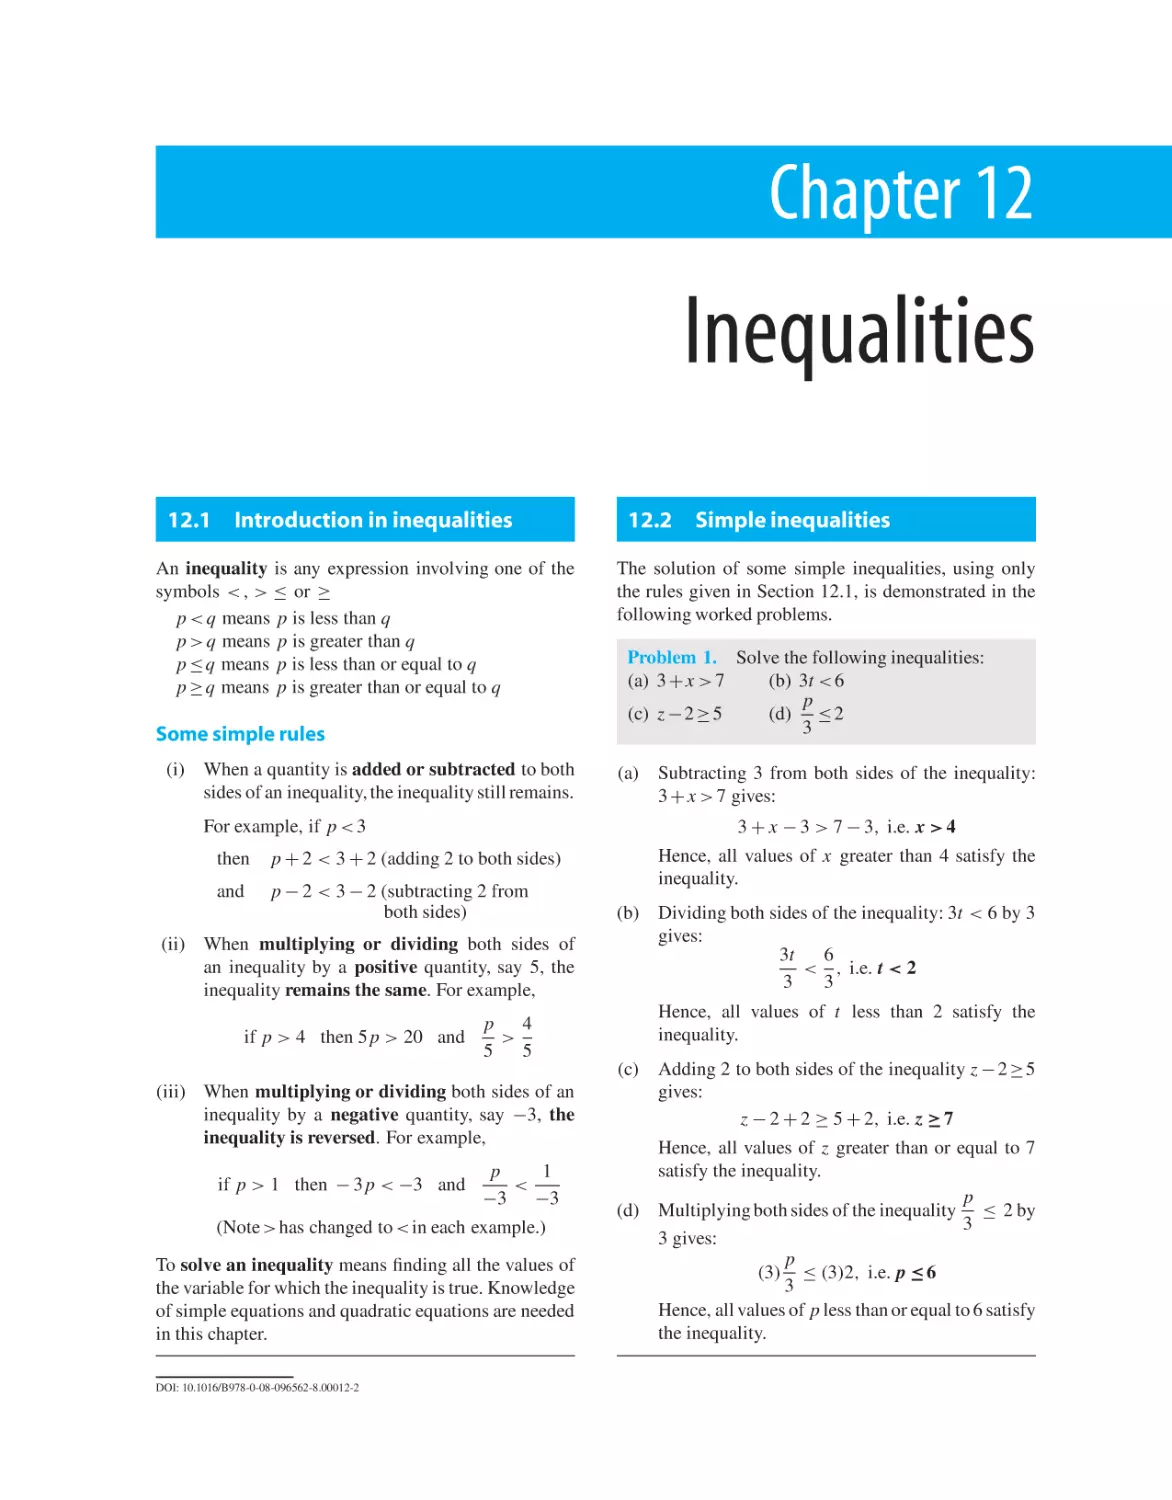 Chapter 12. Inequalities
12.1 Introduction in inequalities
12.2 Simple inequalities